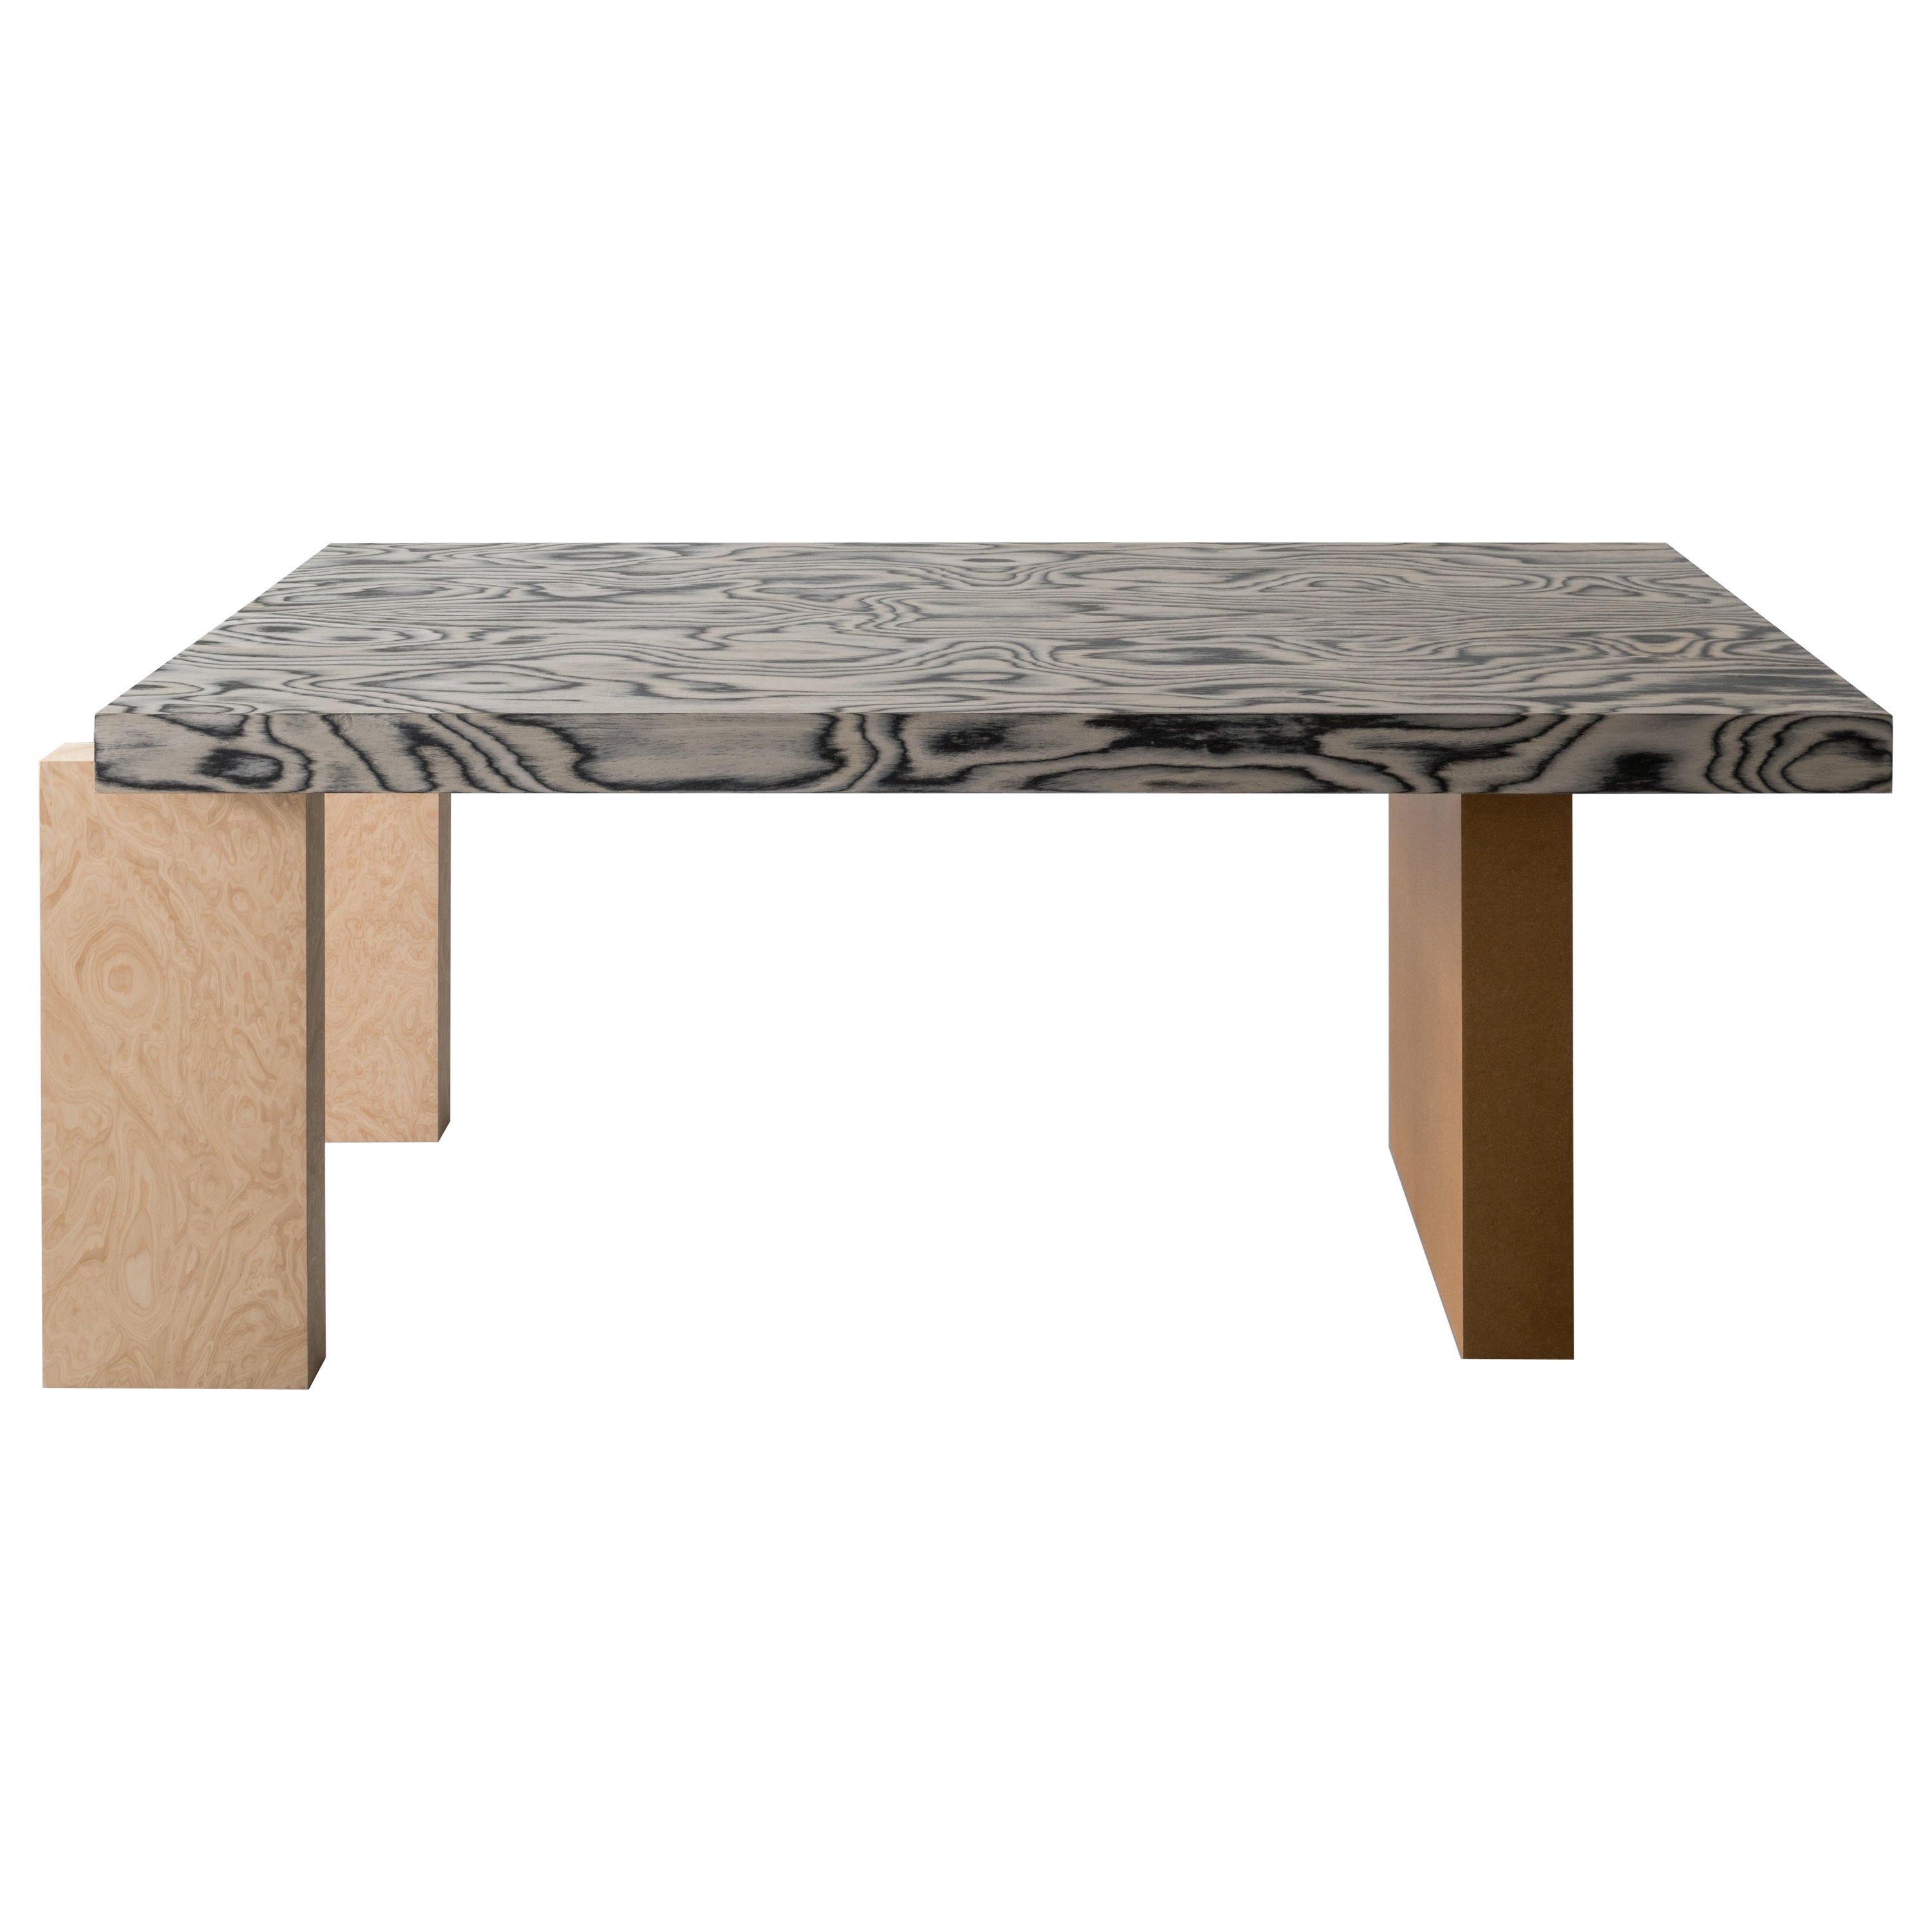 Contemporary Veneered Dining Table. ALPI Sottsass Veneered Table Top 200 x 90cm